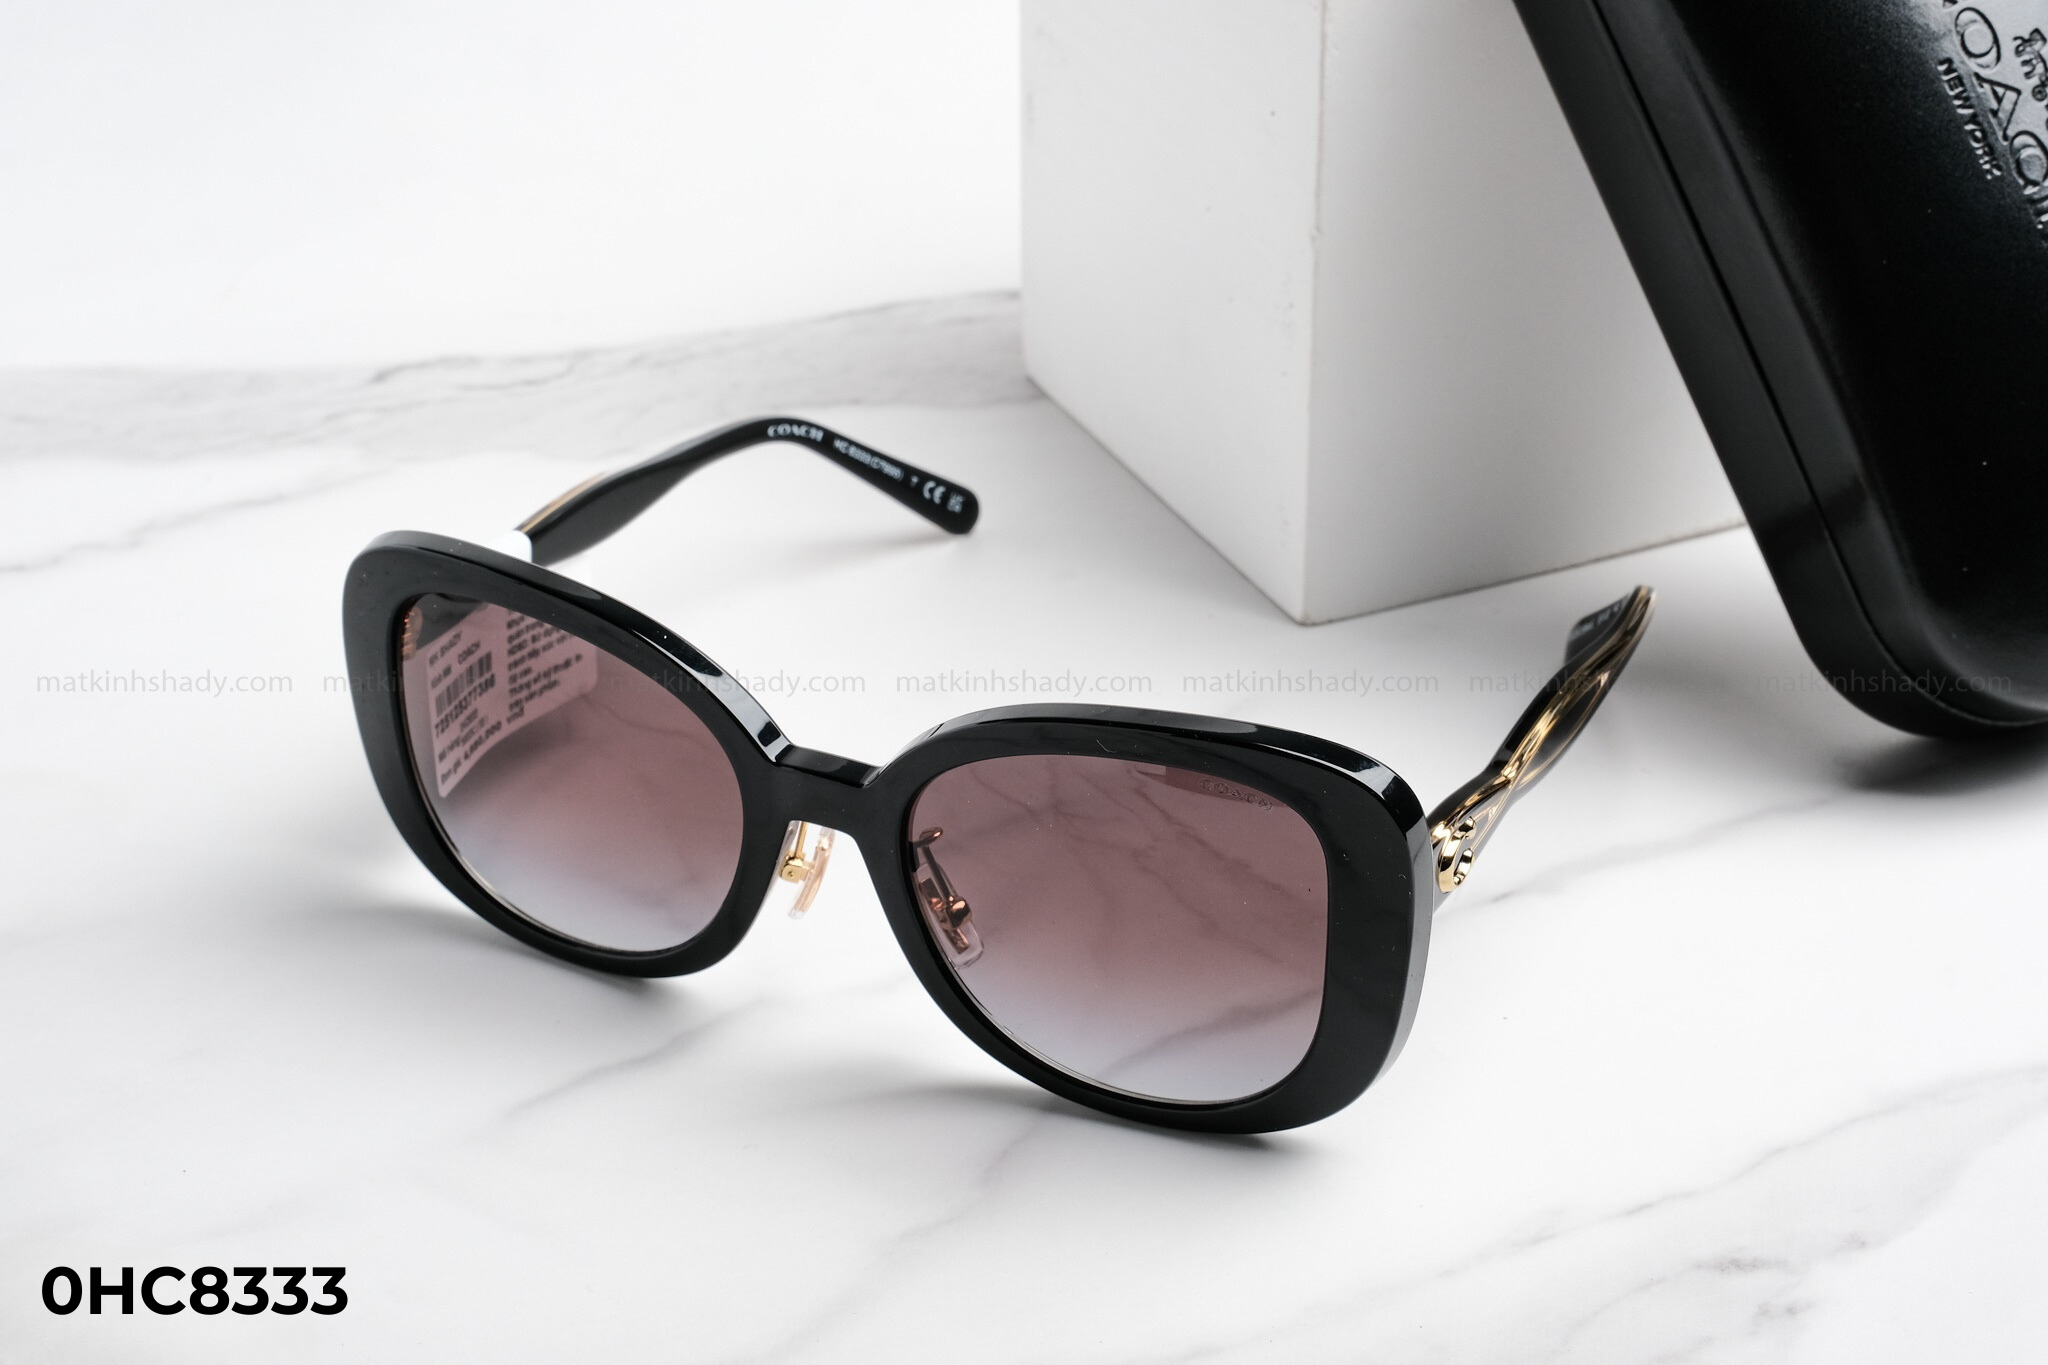  Coach Eyewear - Sunglasses - 0HC8333 